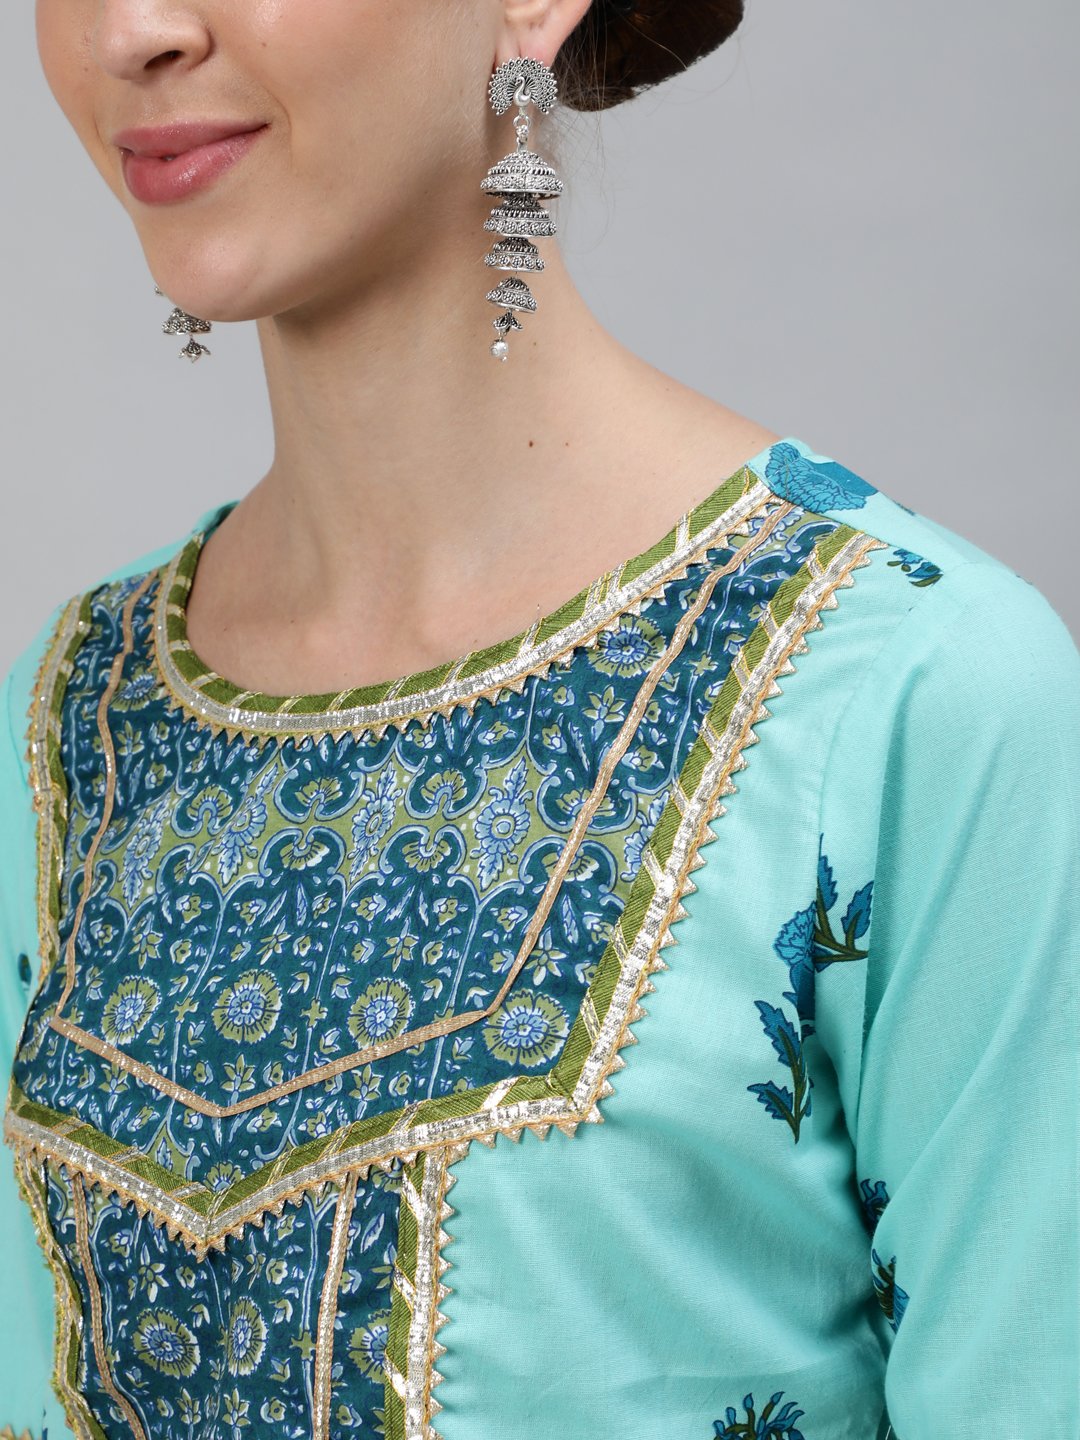 Ishin Women's Cotton Blue Embroidered A-Line Kurta Sharara Dupatta Set